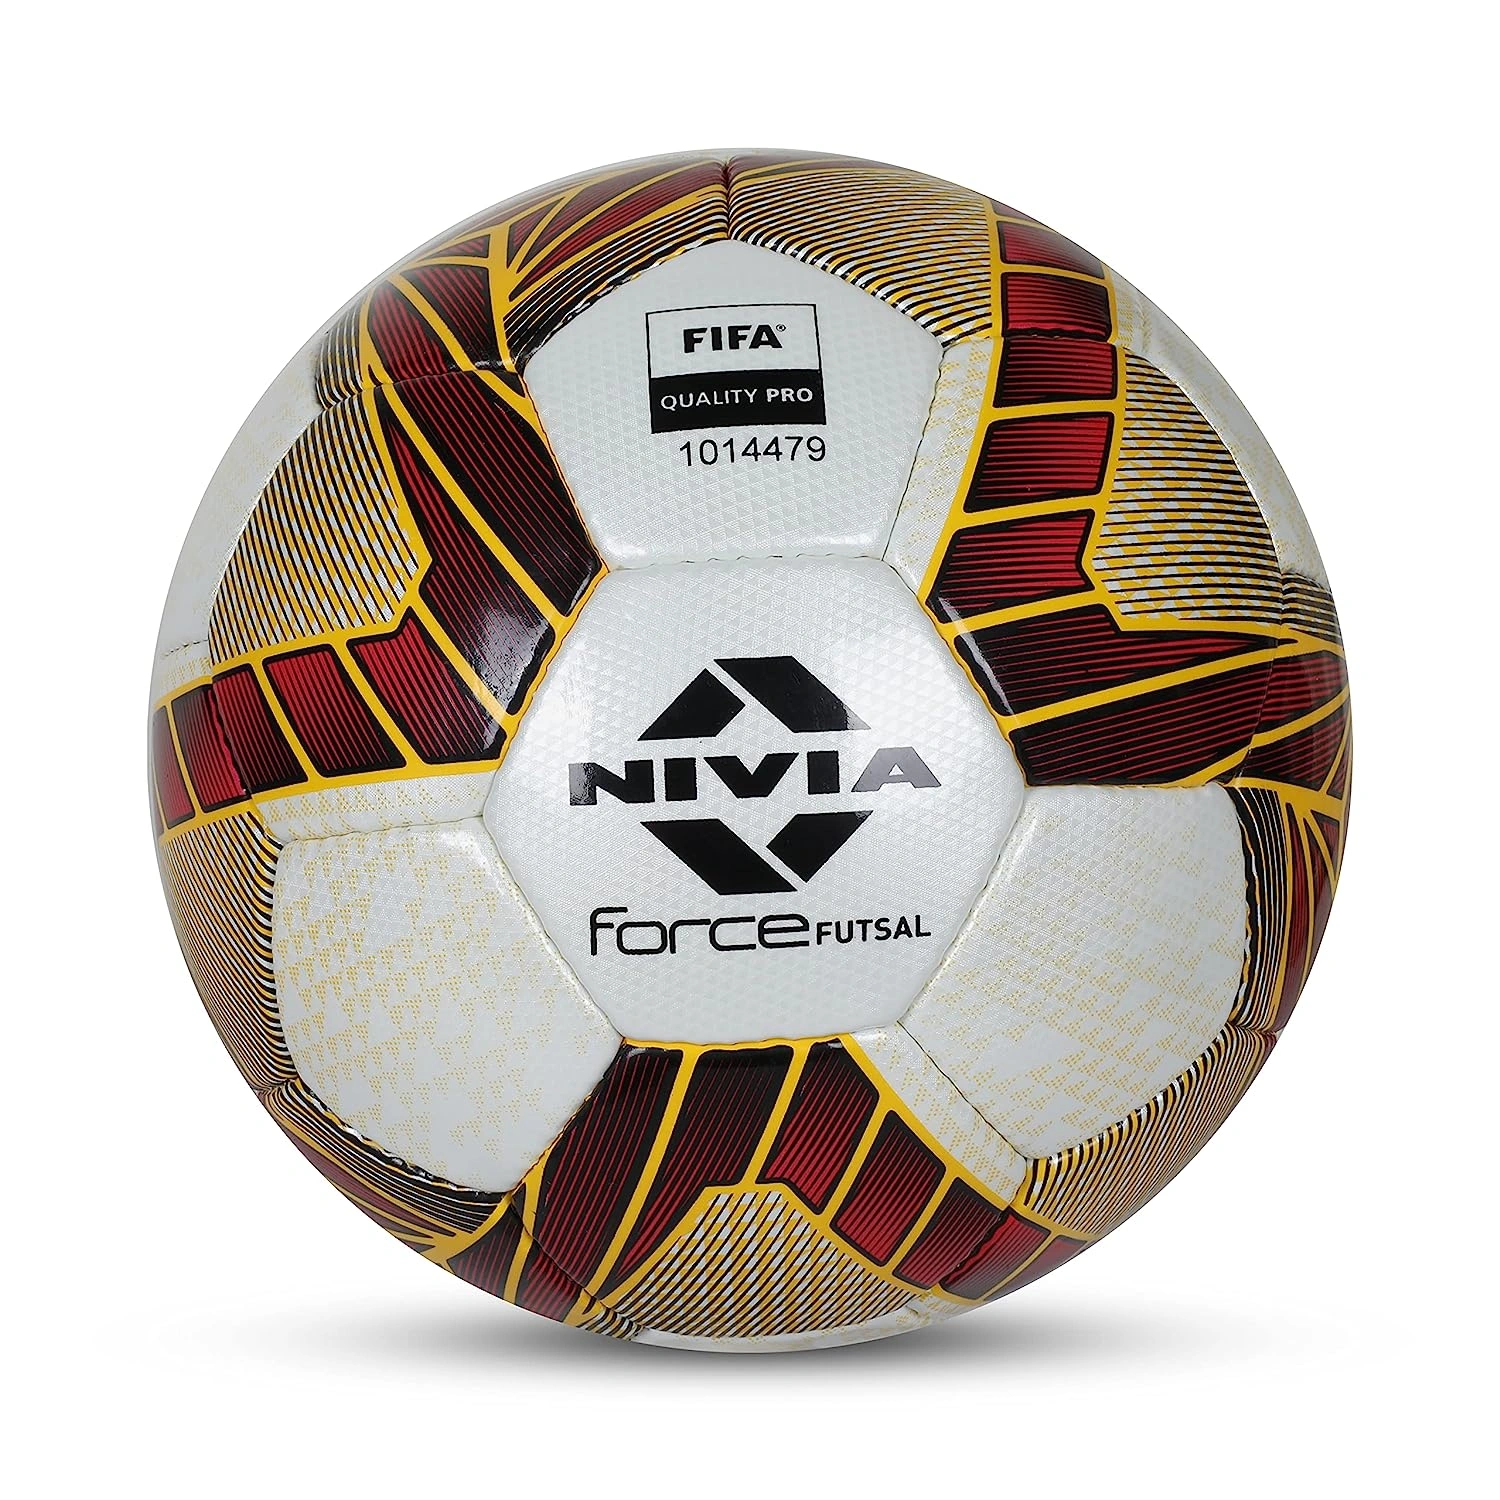 Nivia FB-275 Force Futsal Football